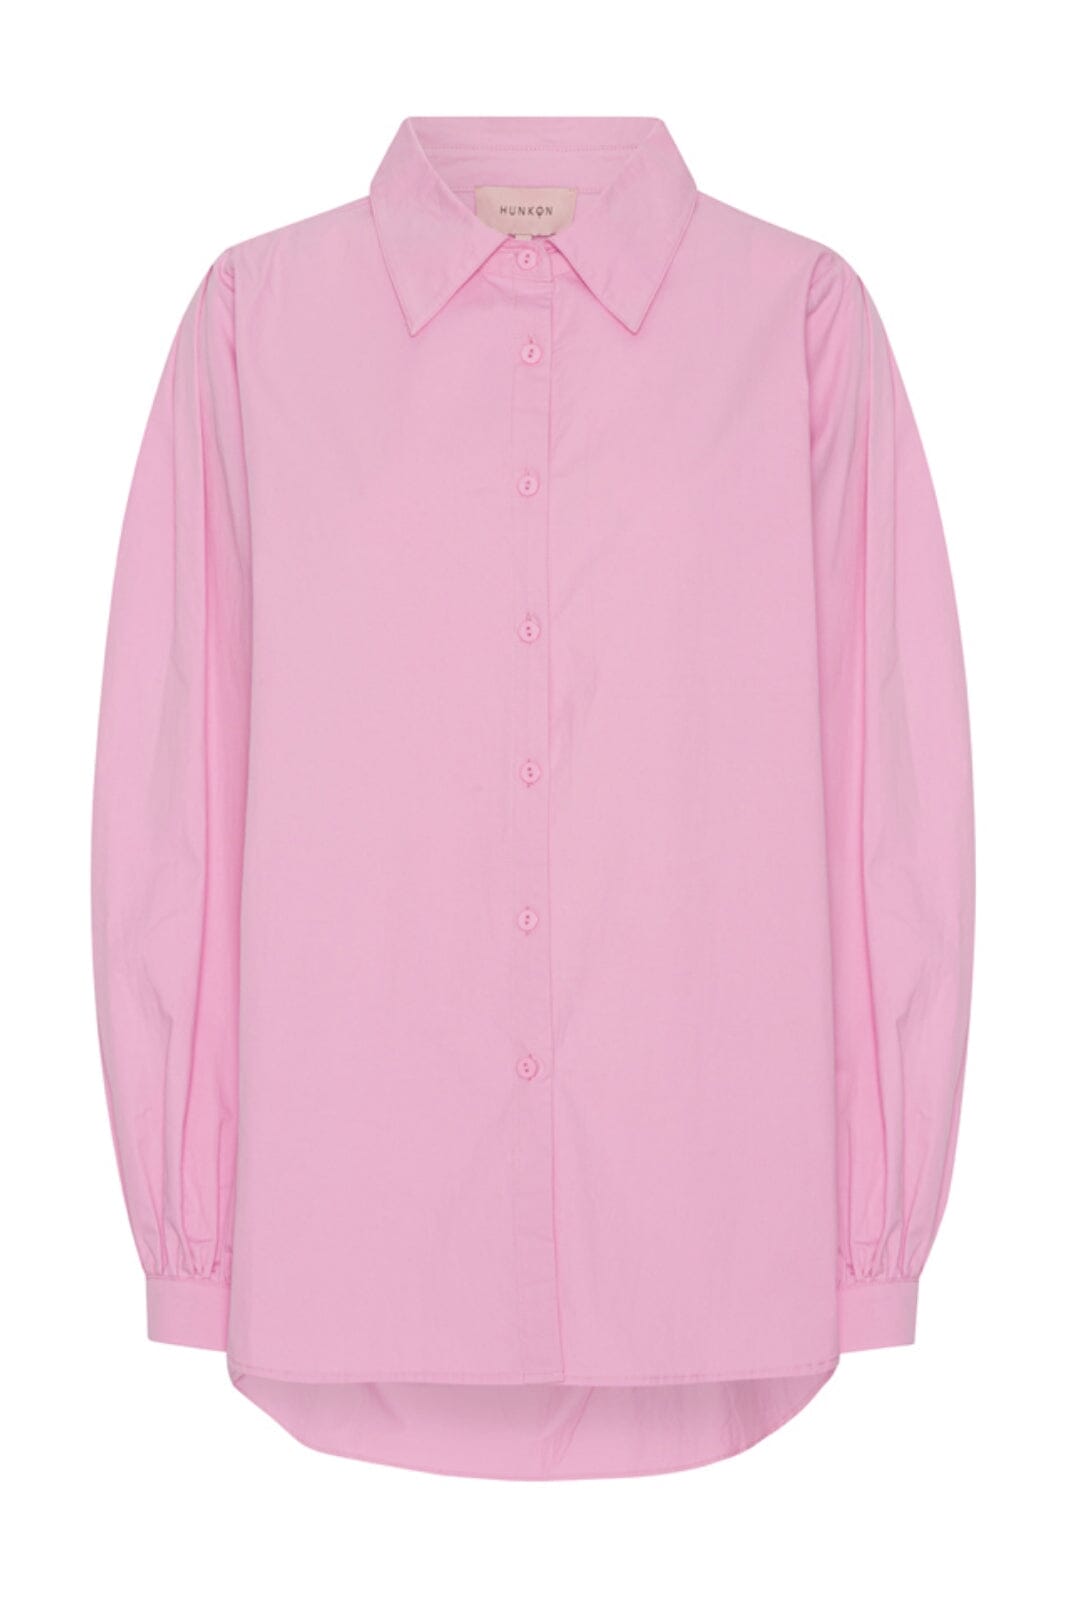 Forudbestilling - Hunkøn - Sabrina Shirt - Pink (Januar/Februar) Skjorter 